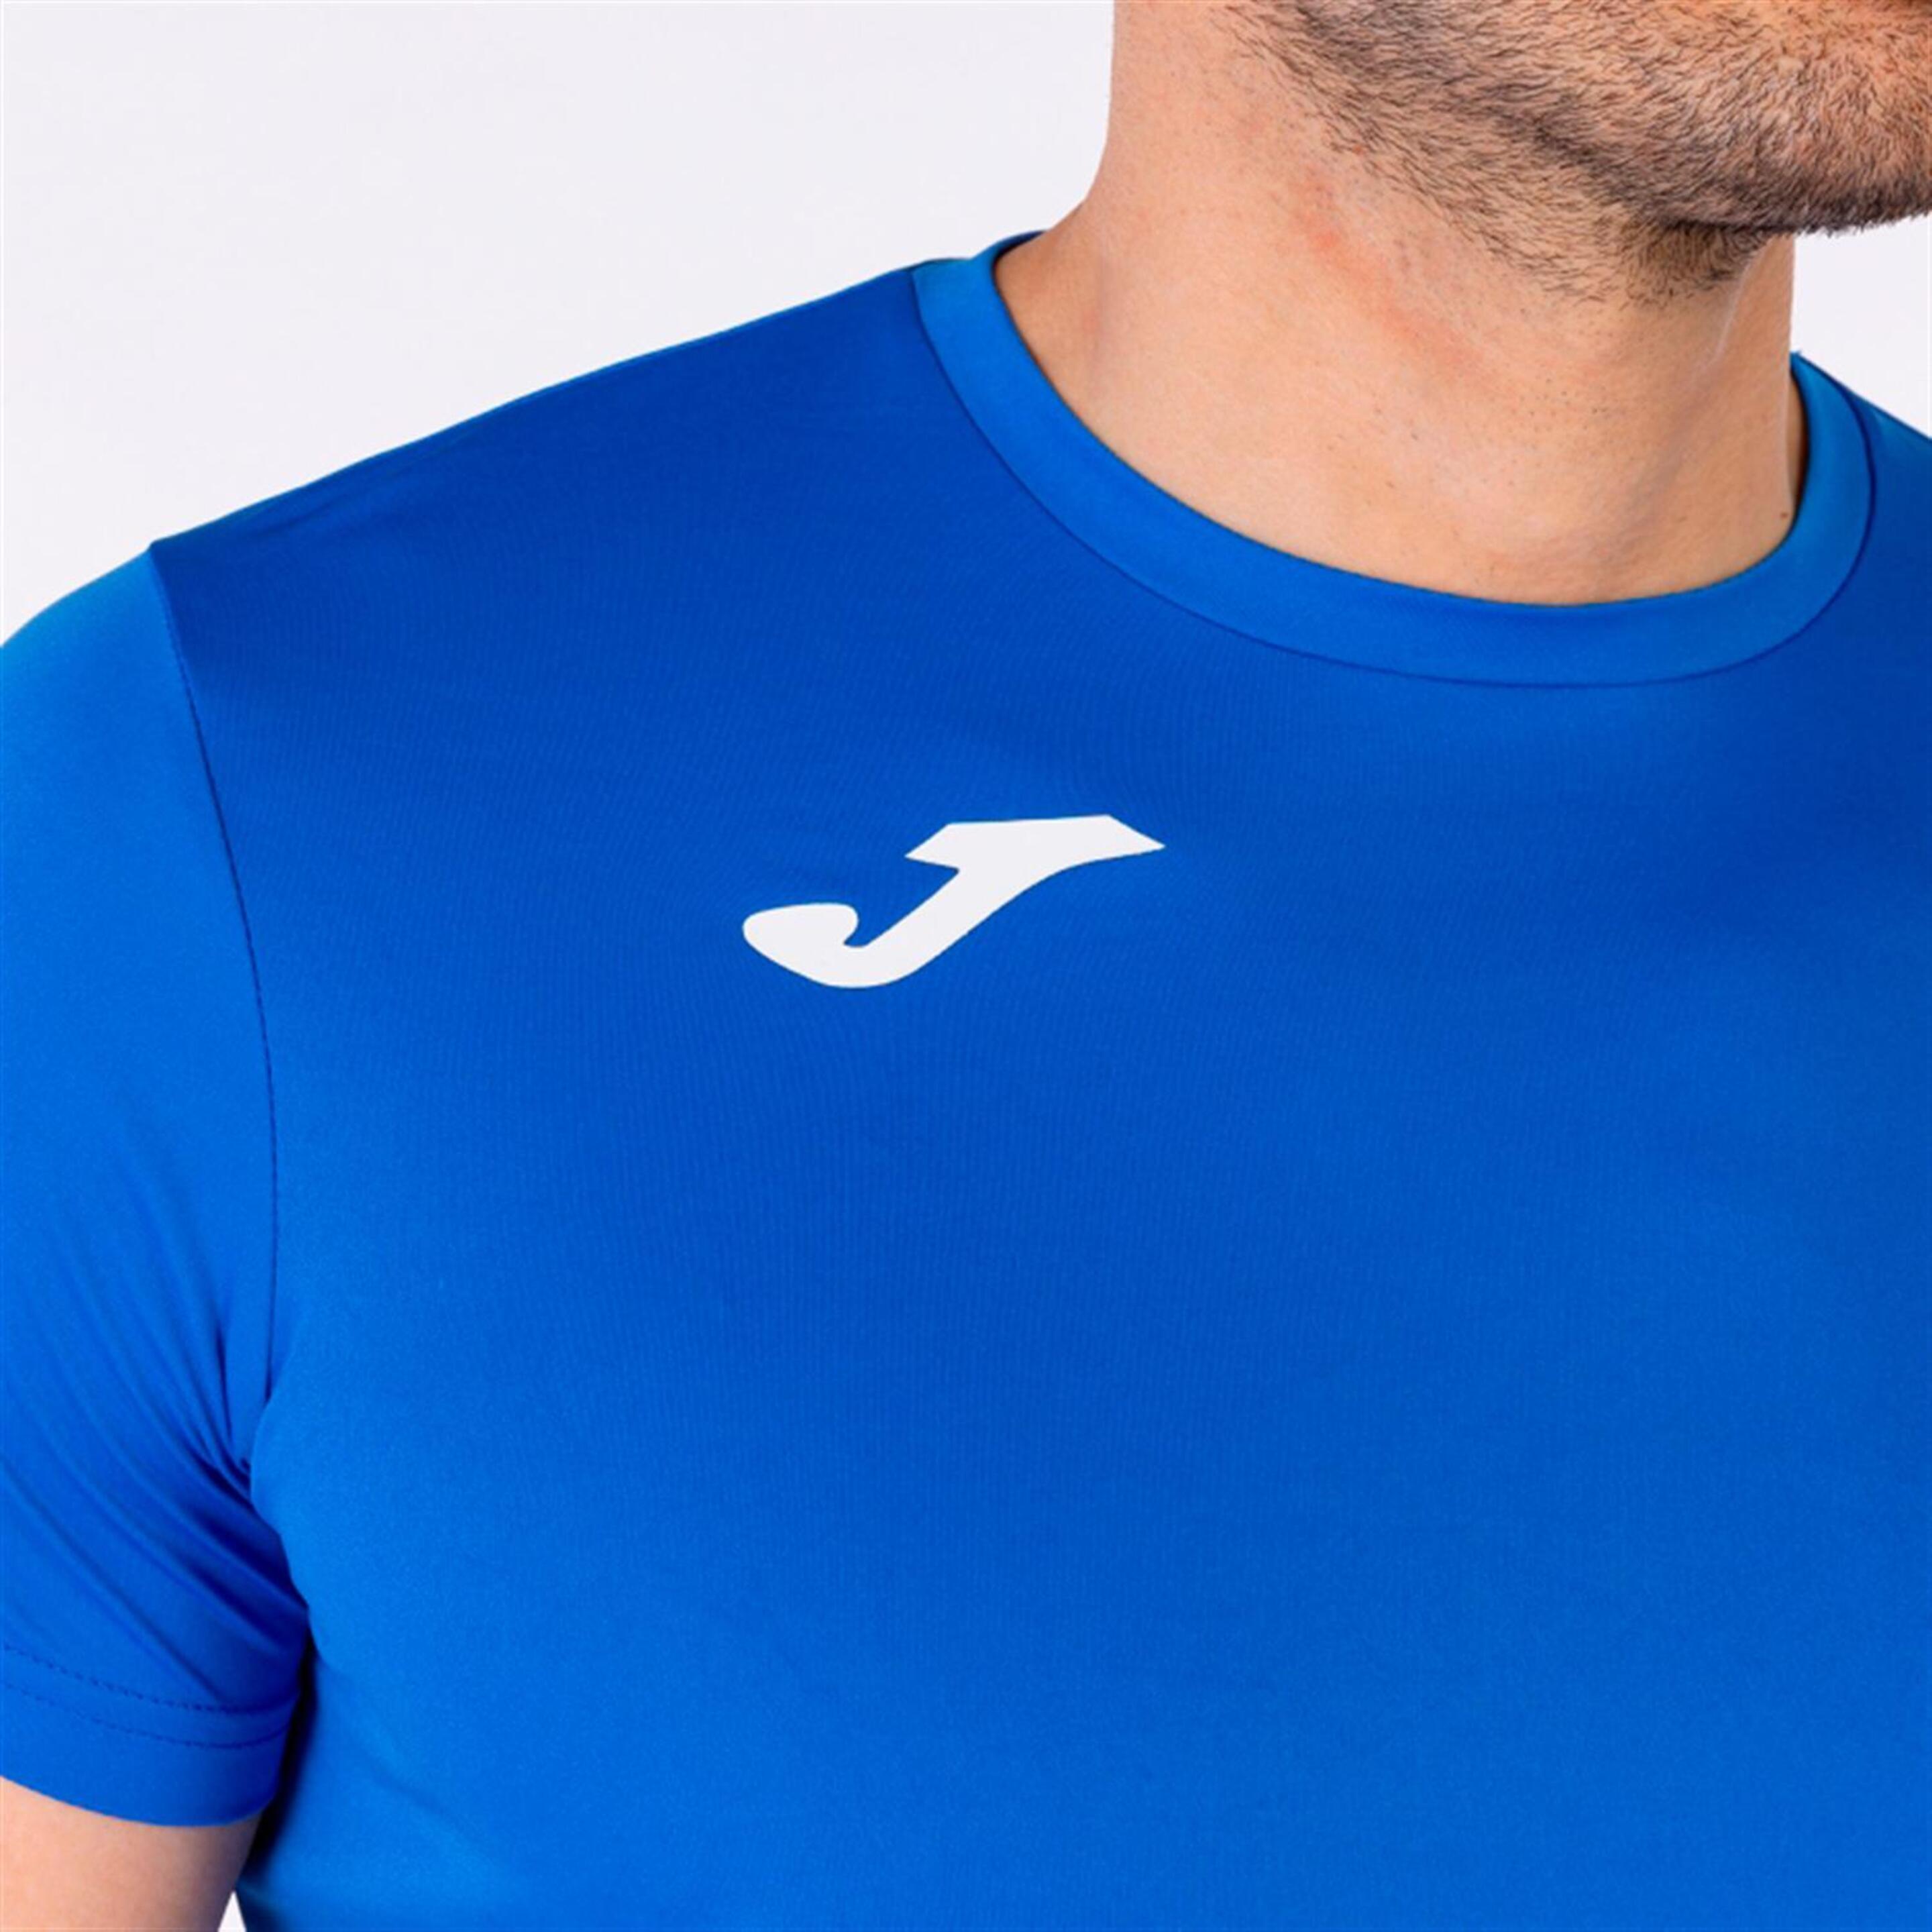 Joma Record II - Azul - Camiseta Running Hombre  MKP